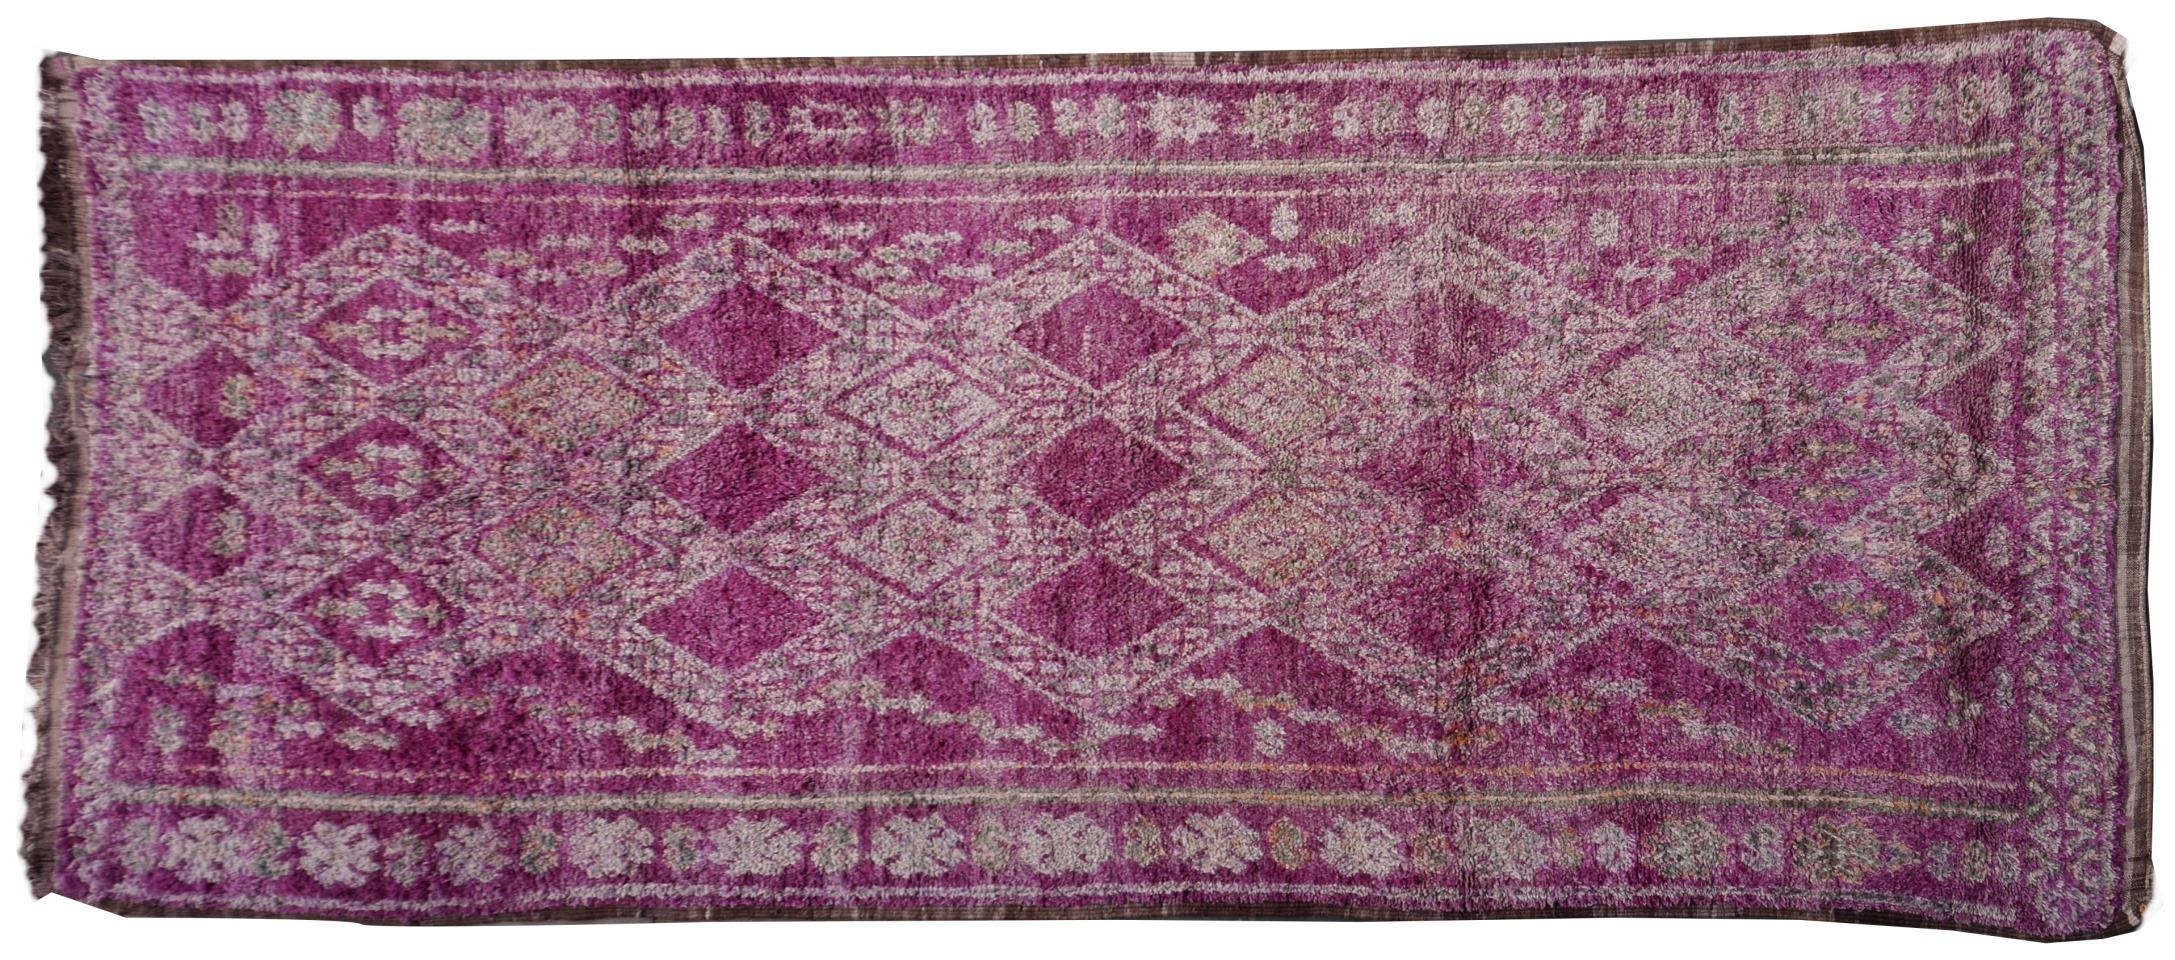 teal berber rug